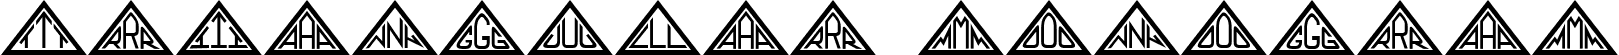 Triangular Monogram